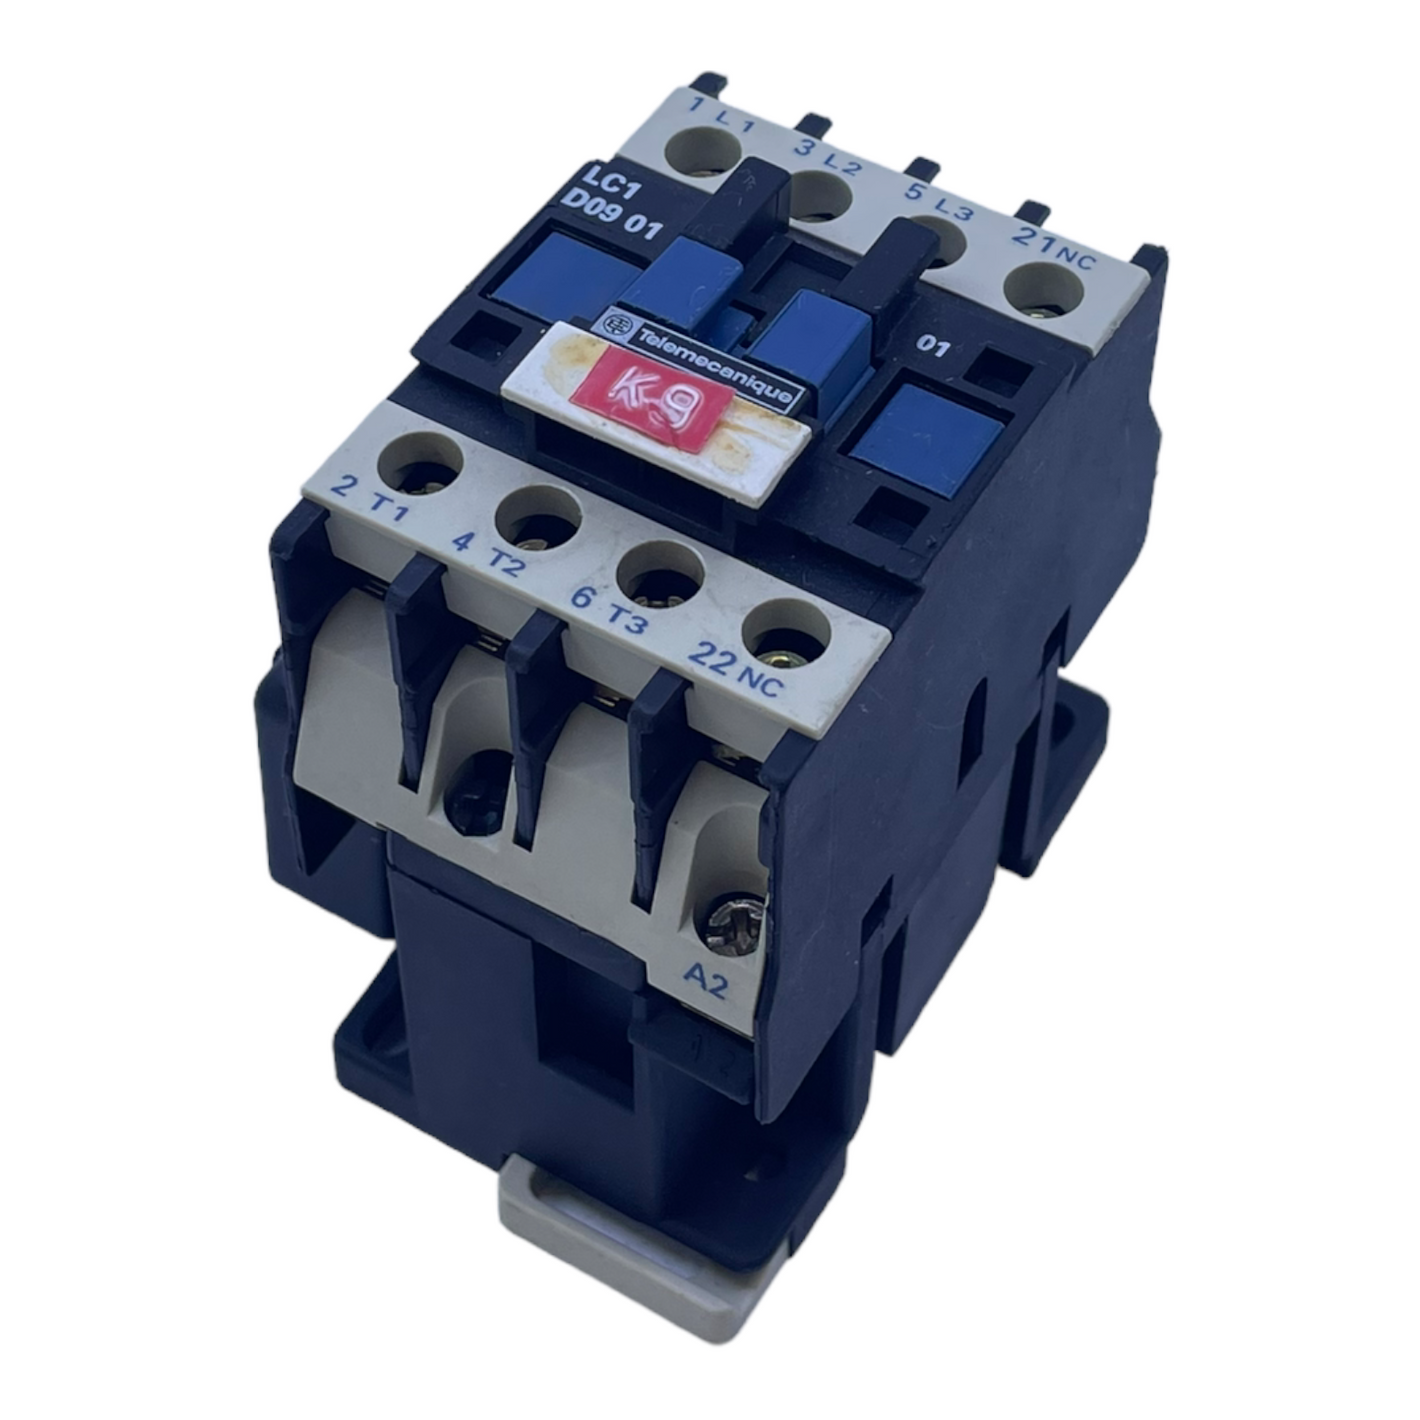 Telemecanique D09 01 circuit breaker for industrial use 230V 50Hz